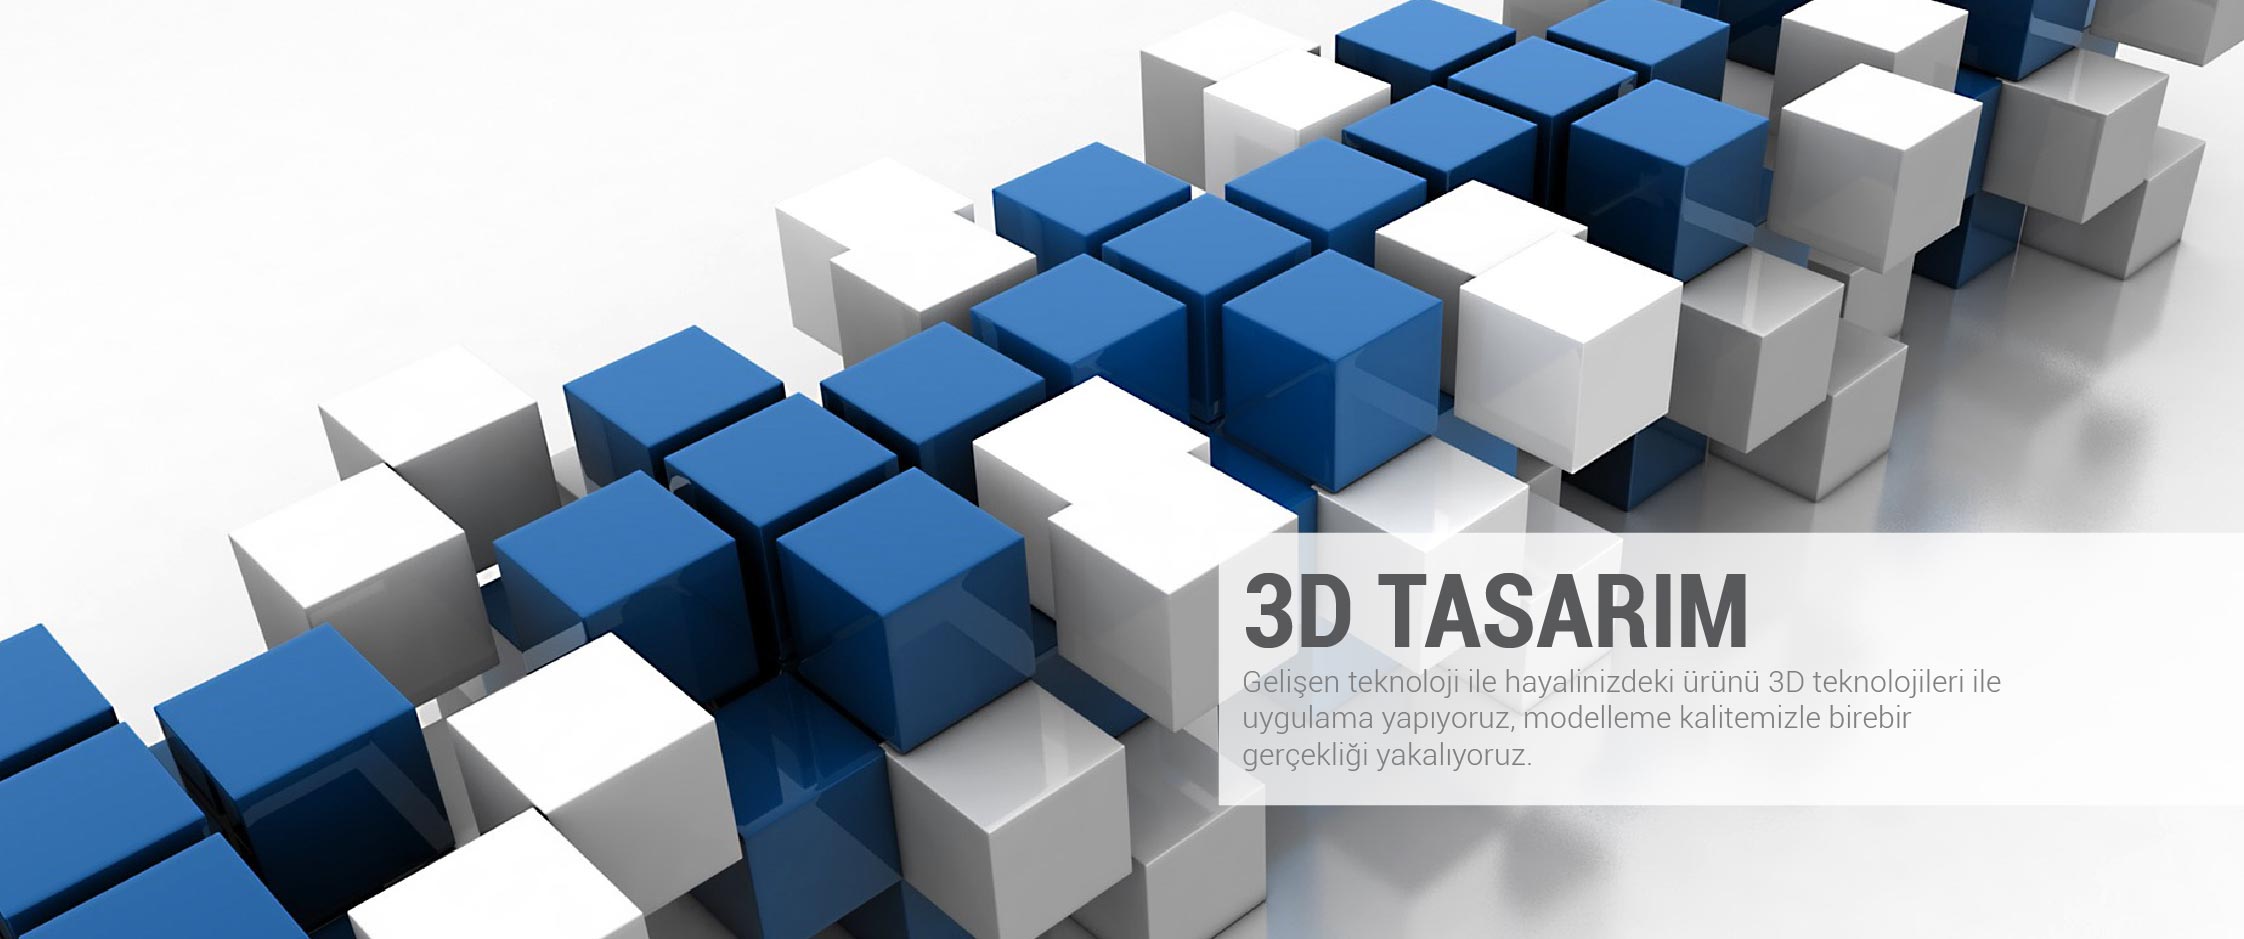 3D TASARIM